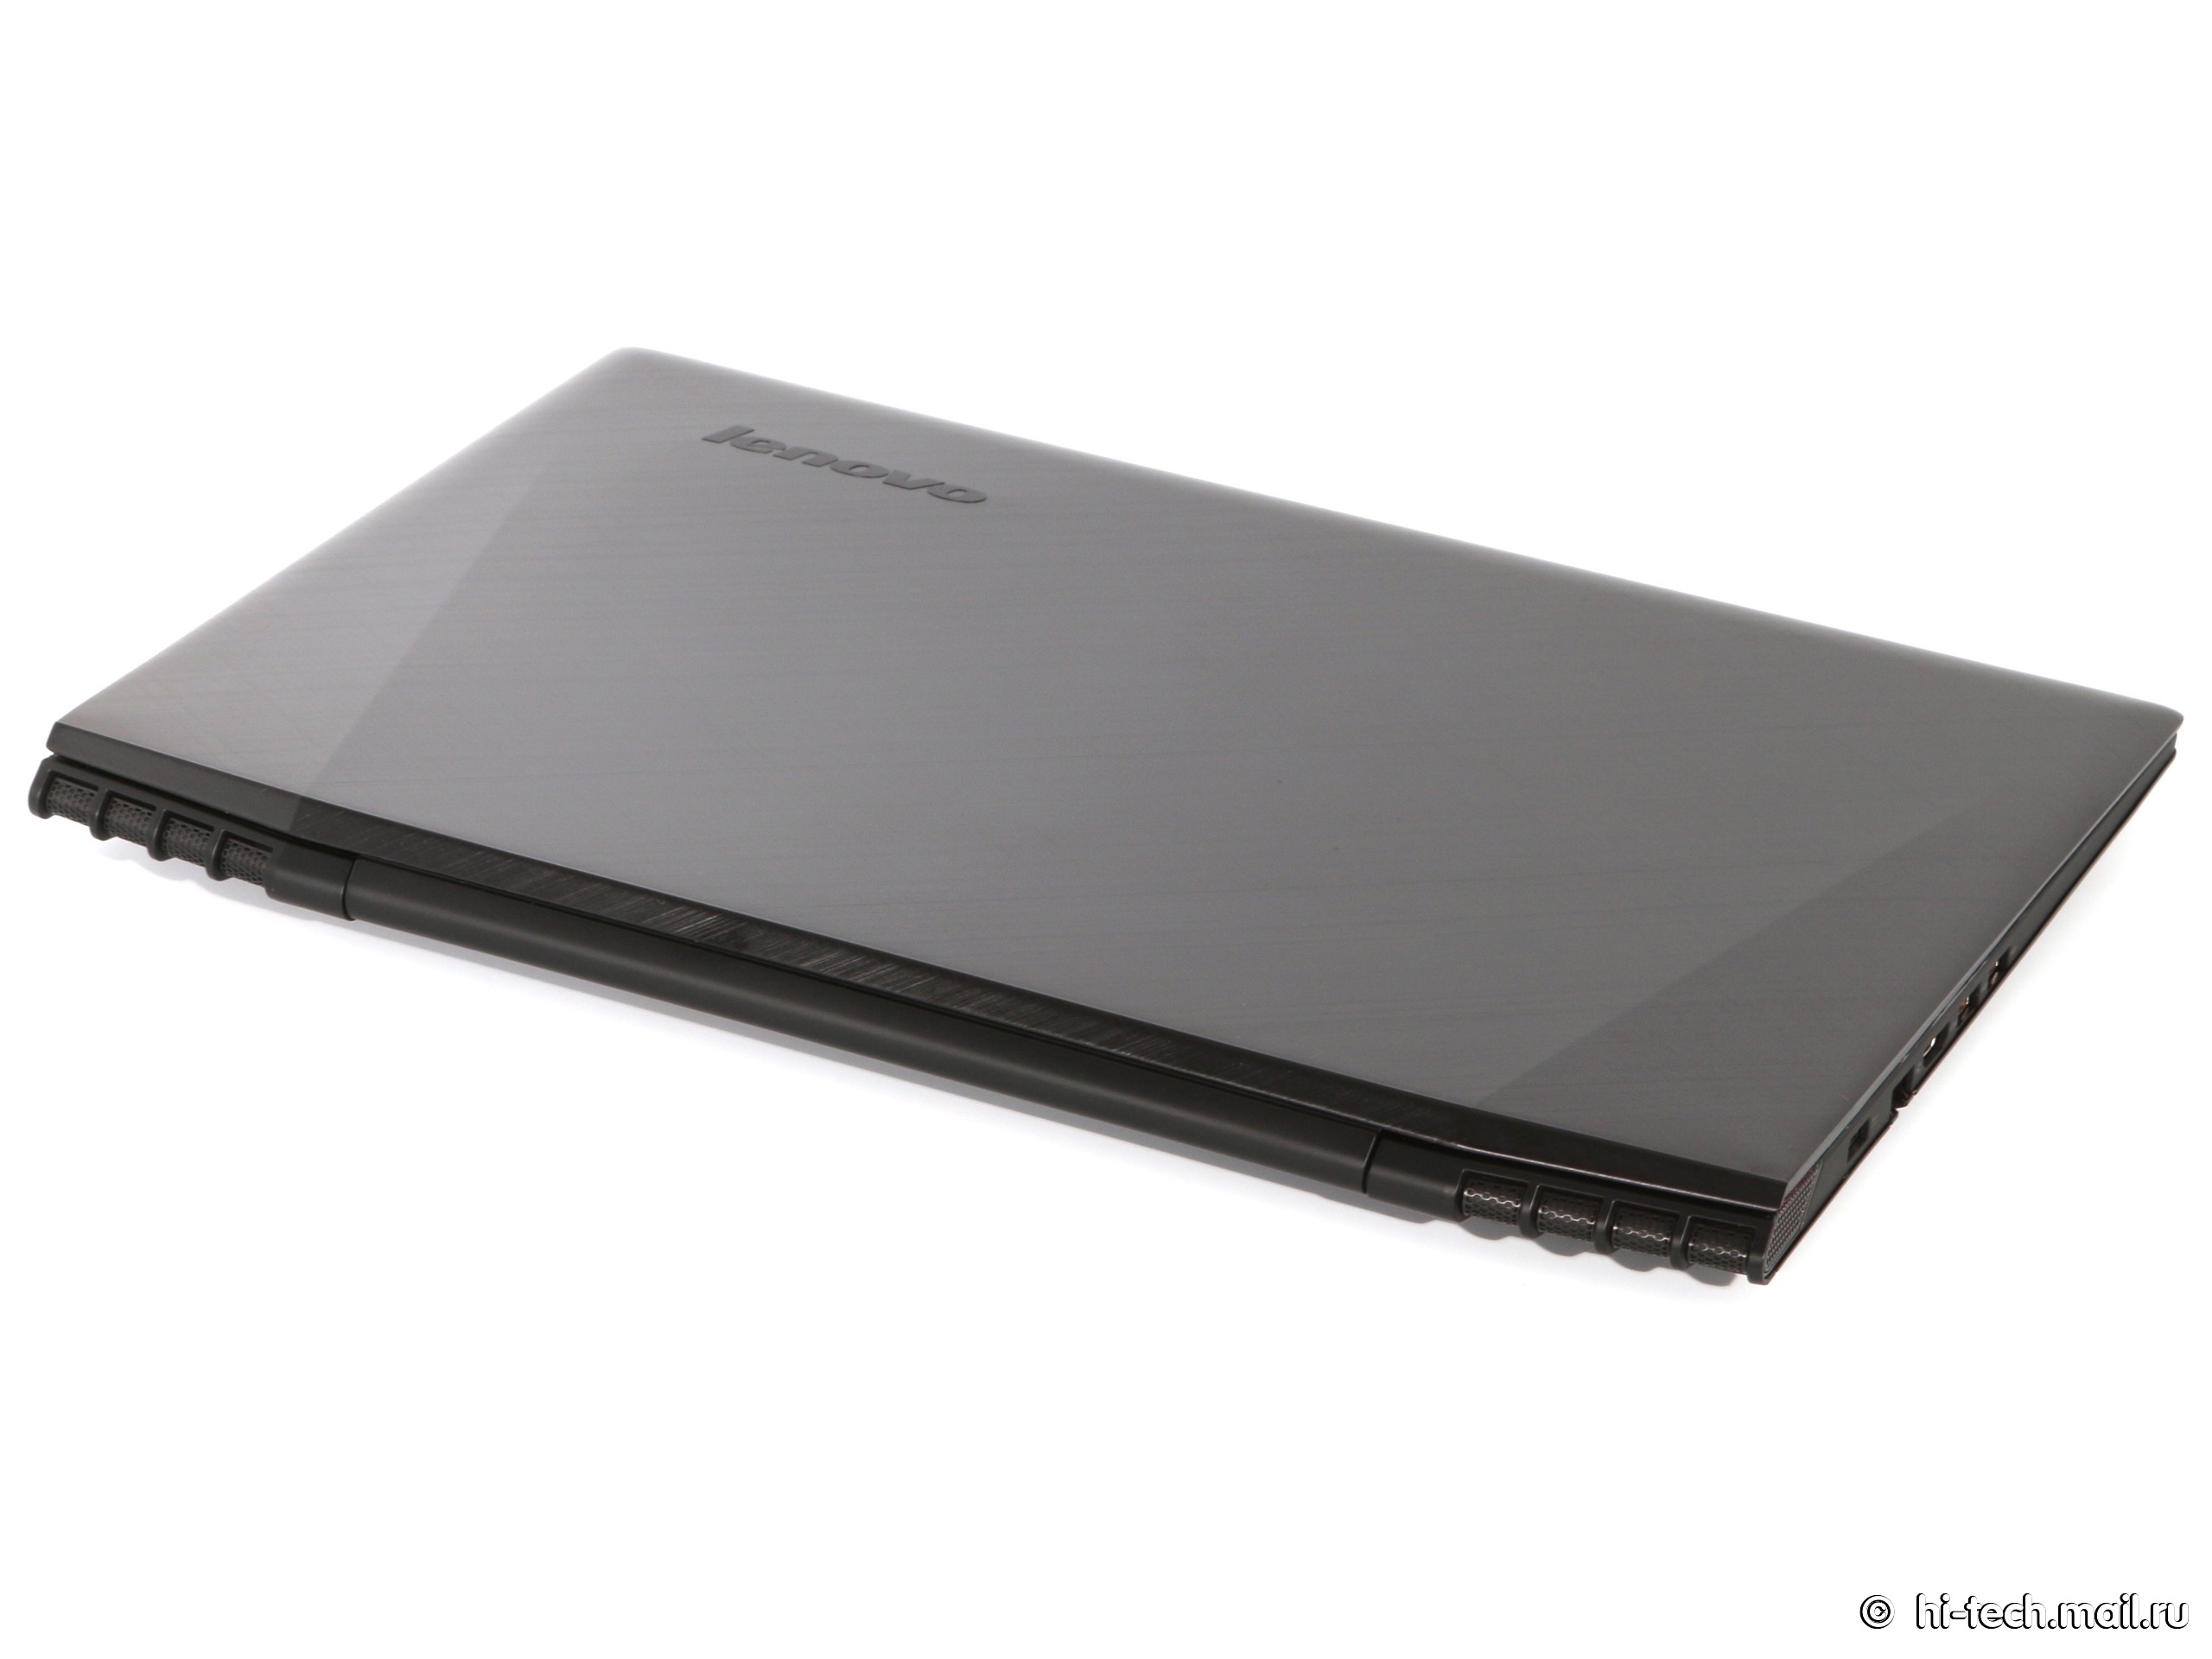 Купить Ноутбук Lenovo Ideapad Y50-70